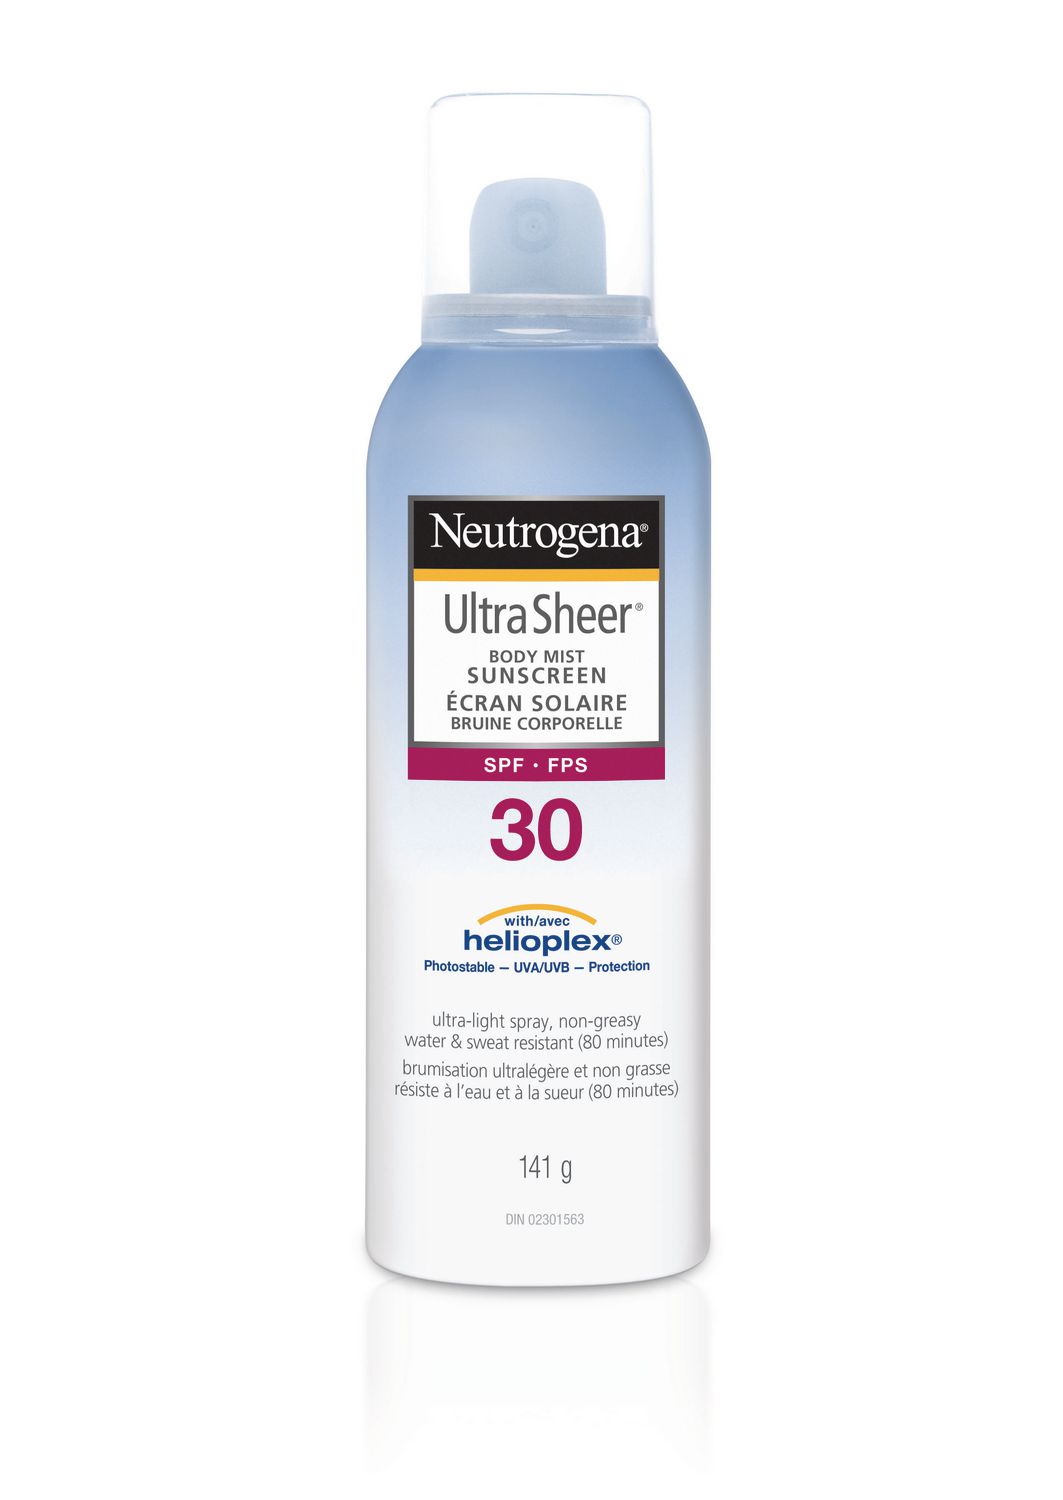 neutrogena sunscreen spray cvs